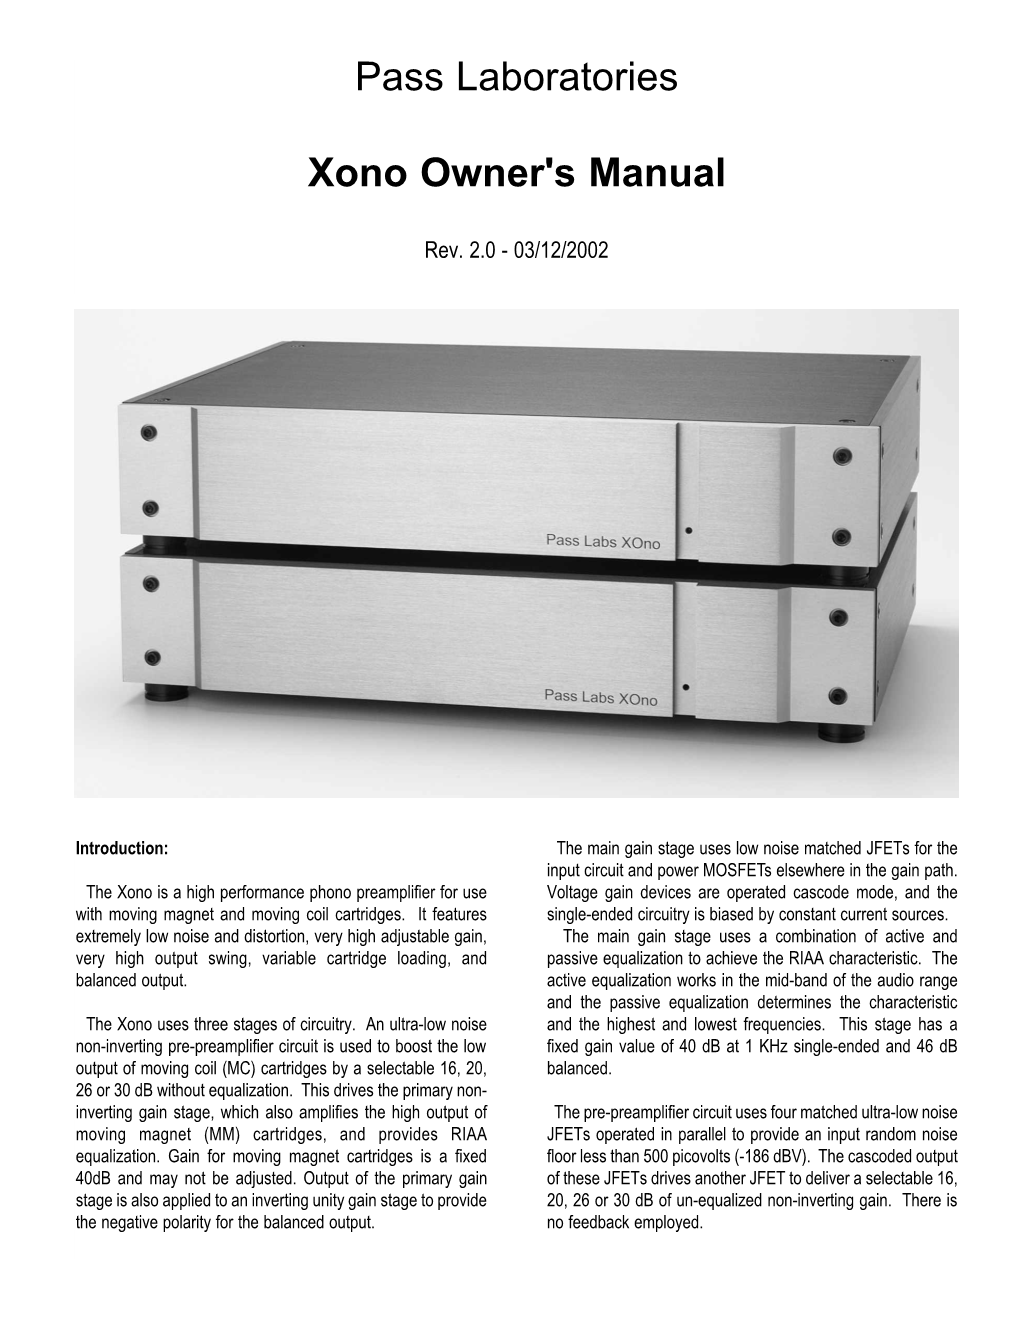 Pass Laboratories Xono Owner's Manual